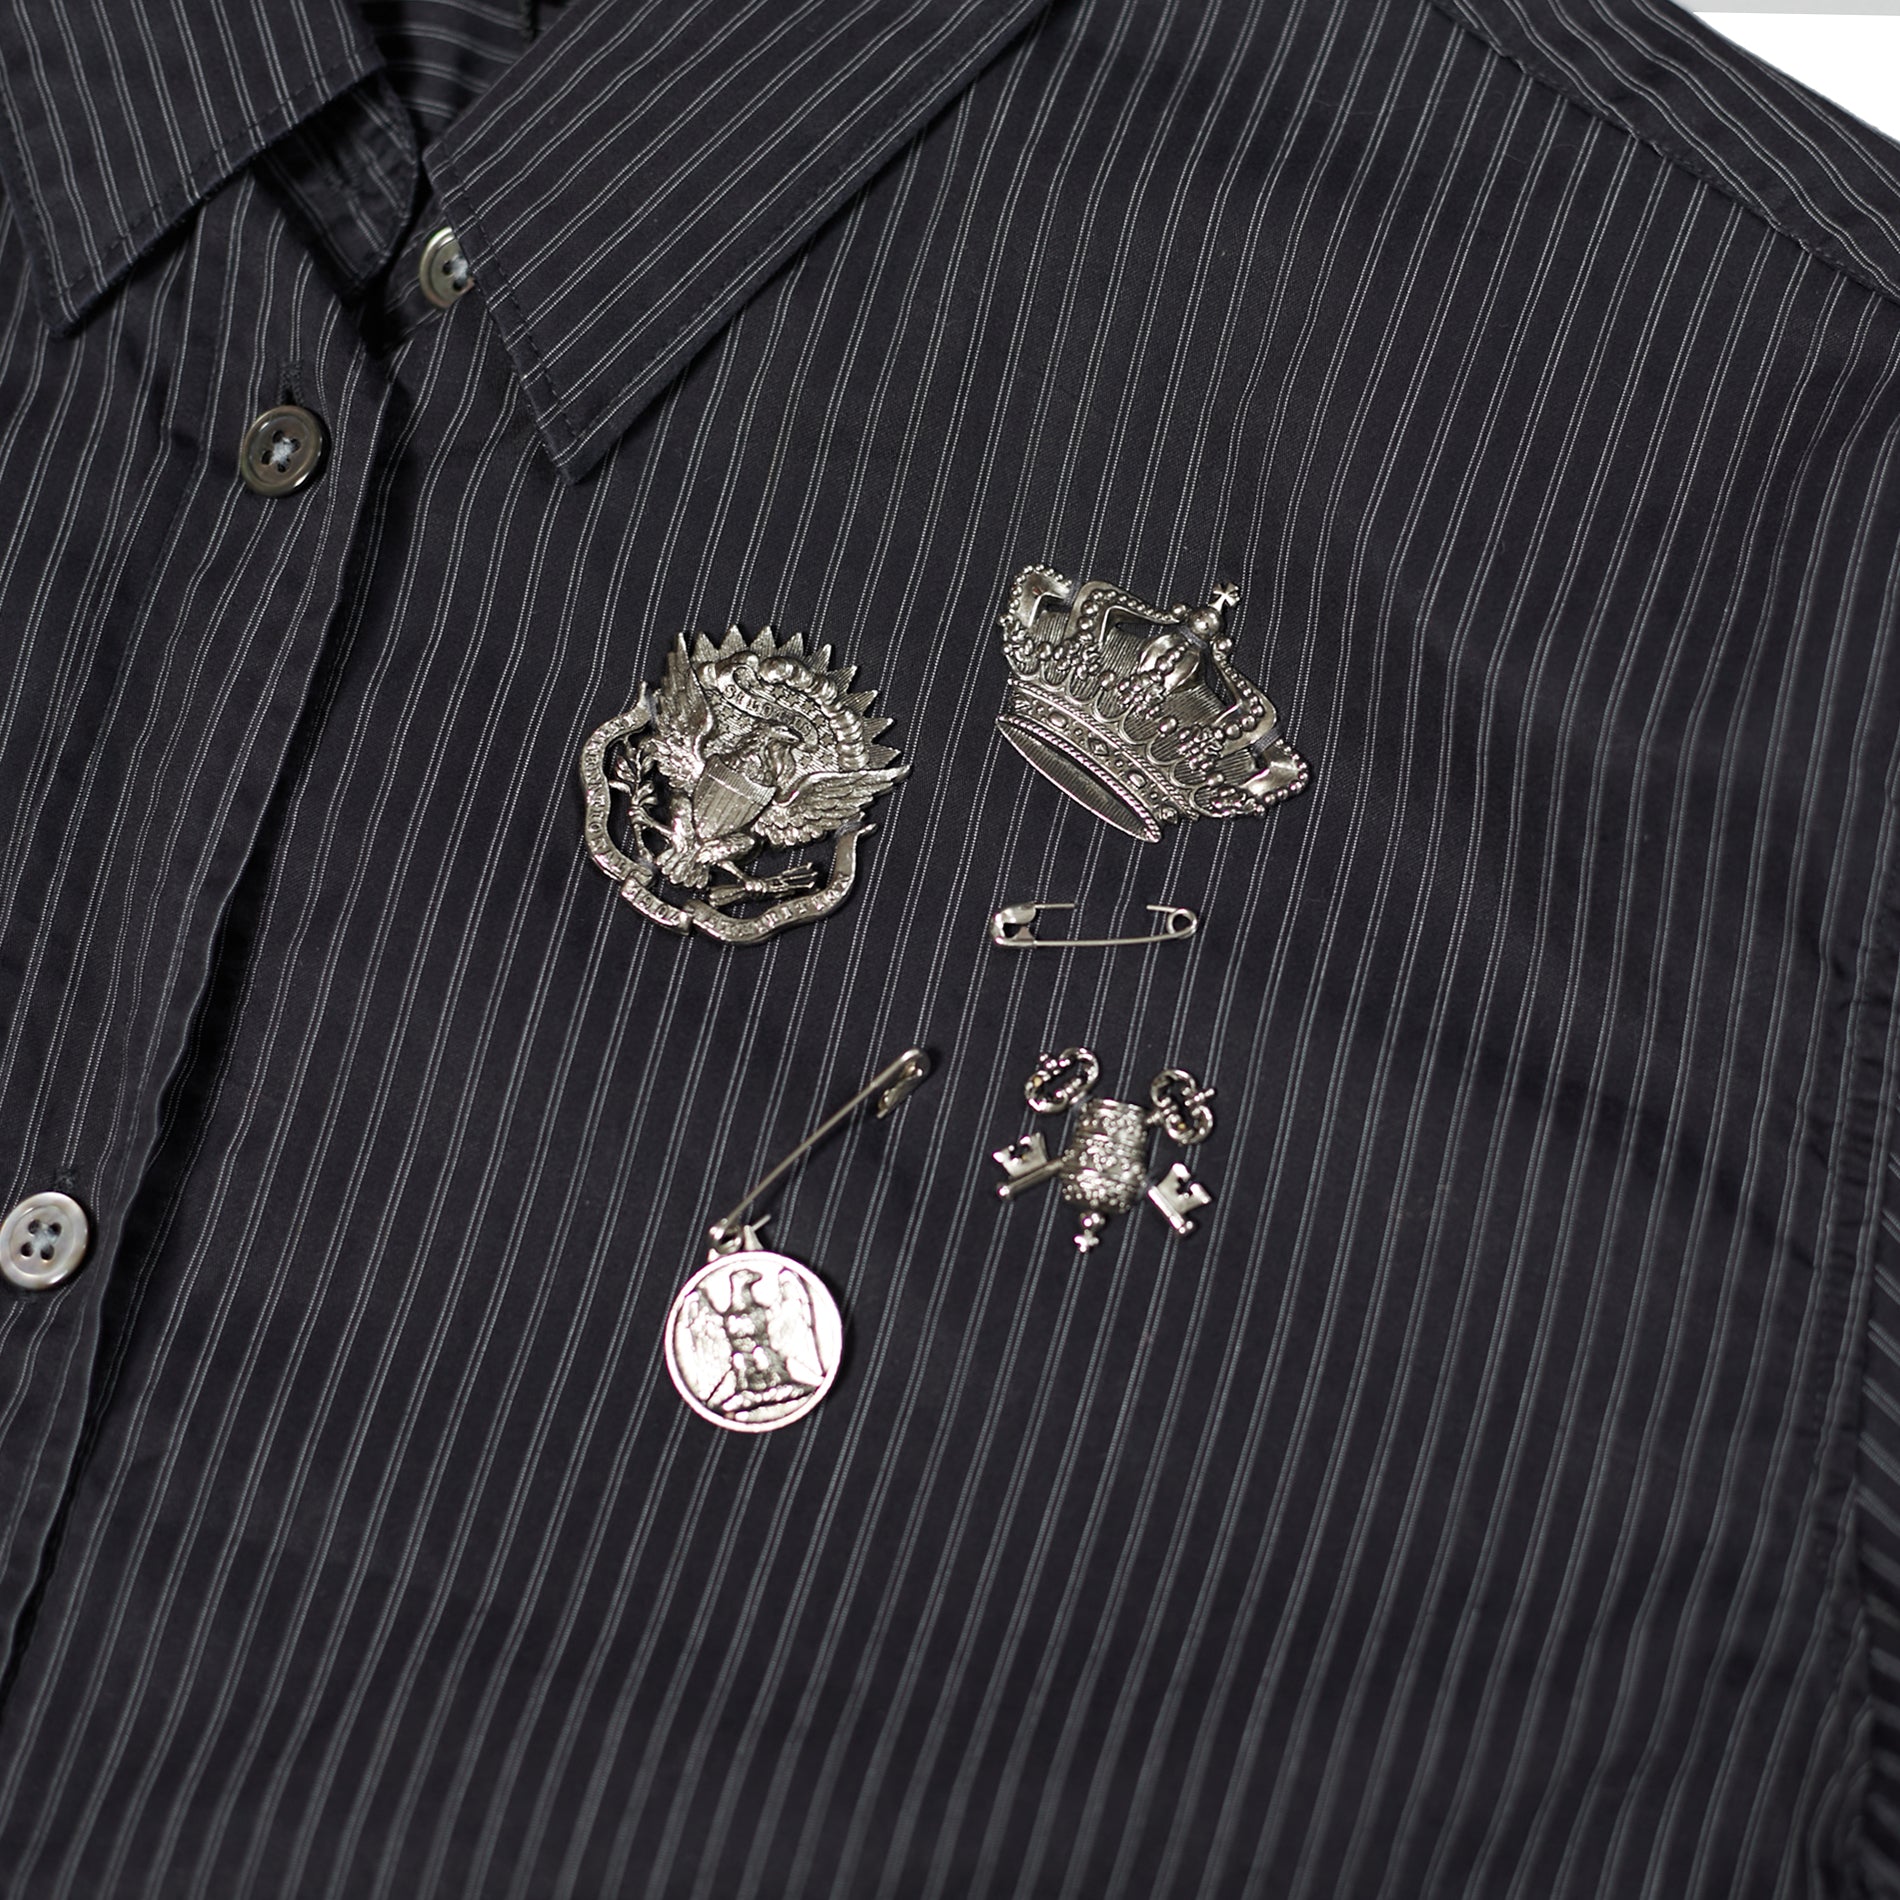 Balmain SS11 Pinstripe Pin Shortsleeve Shirt